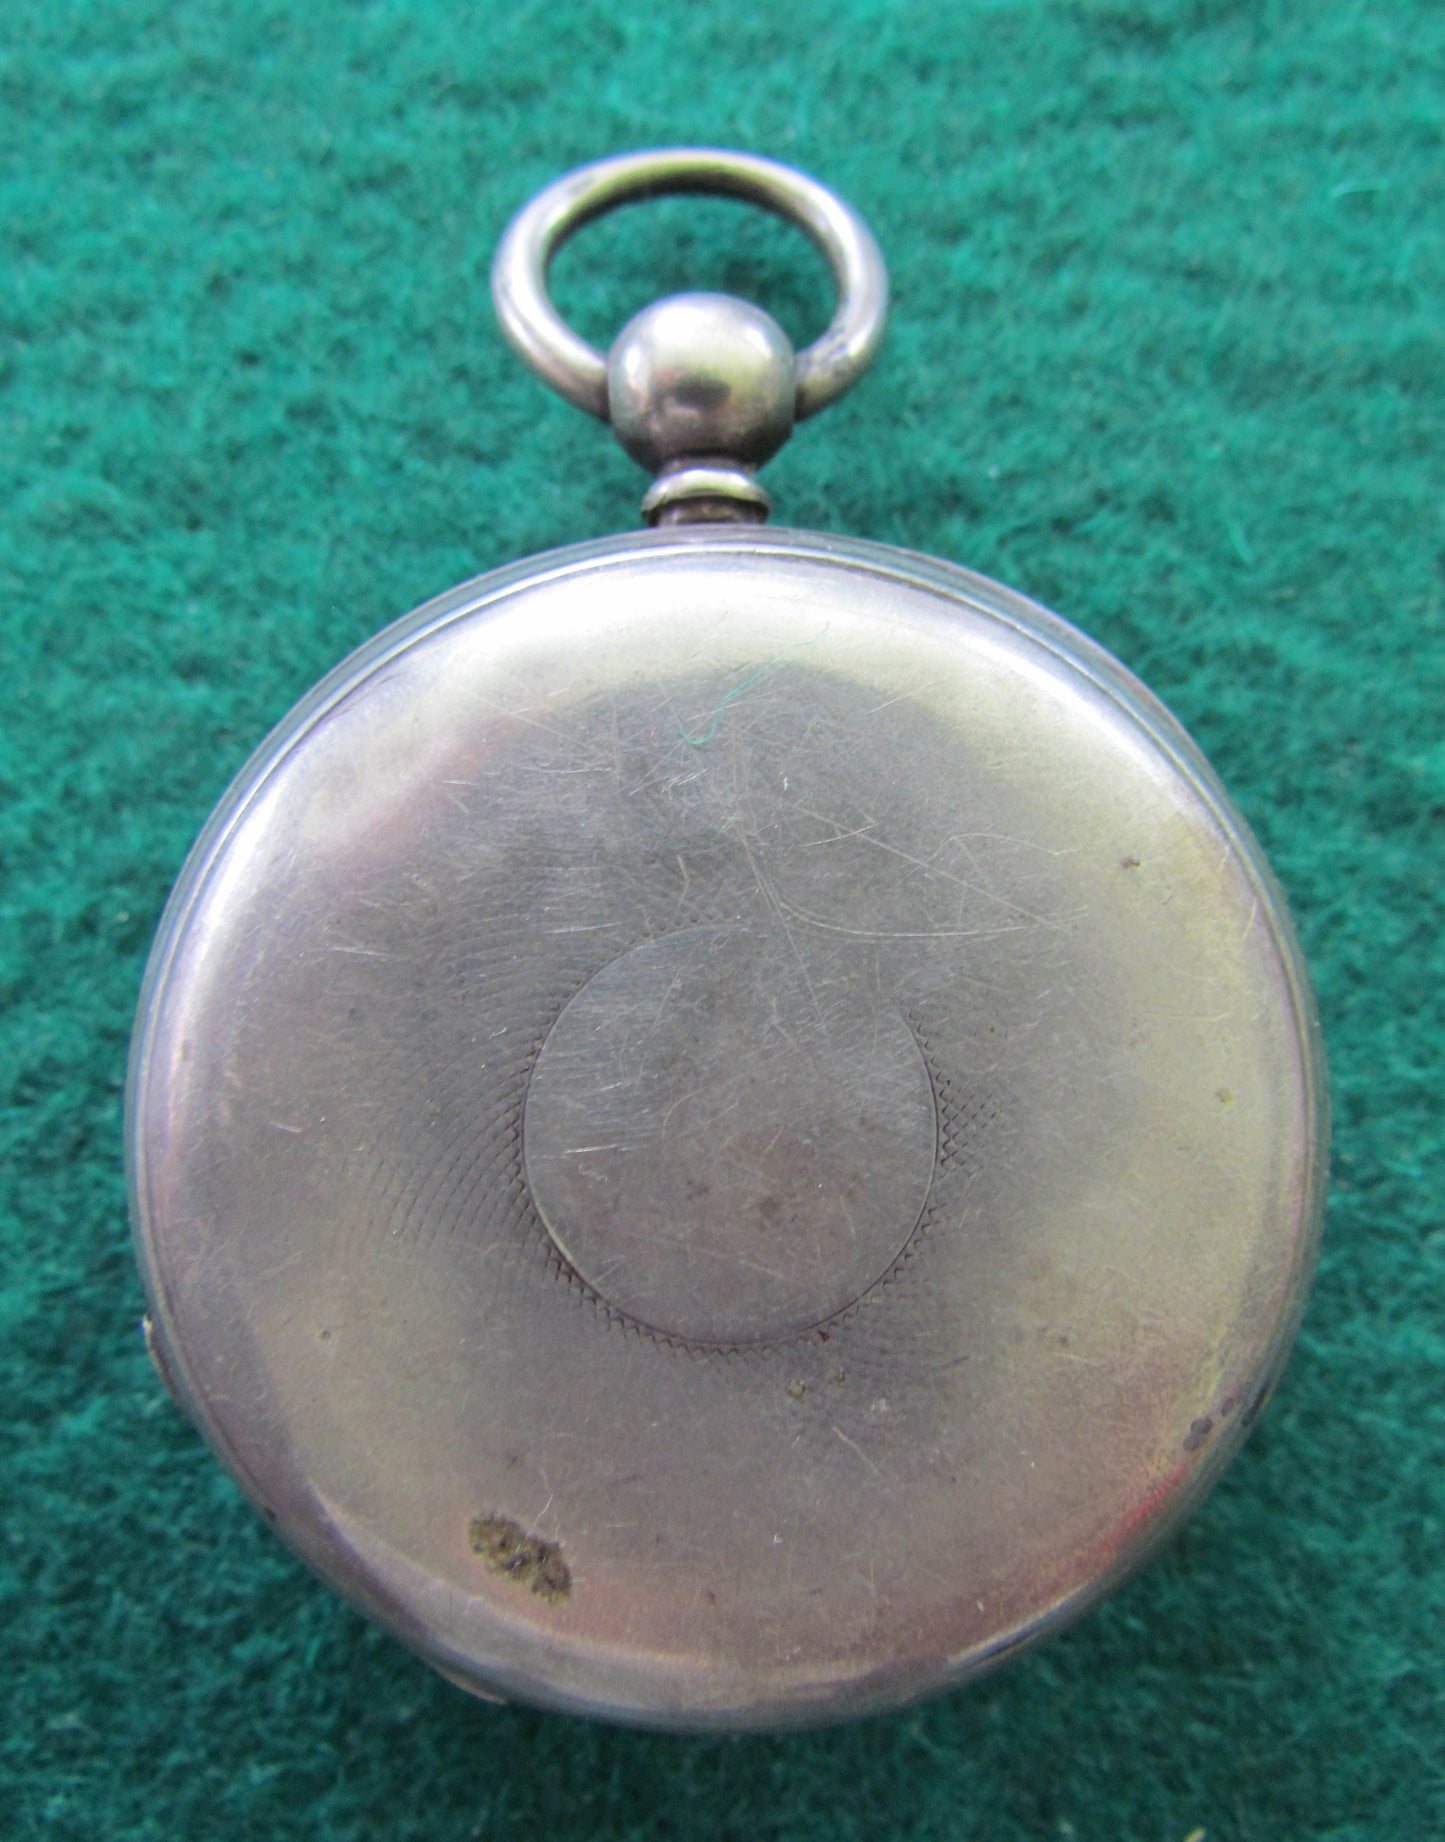 Waltham Open Faceced Pocket Watch By William Ellery 1877